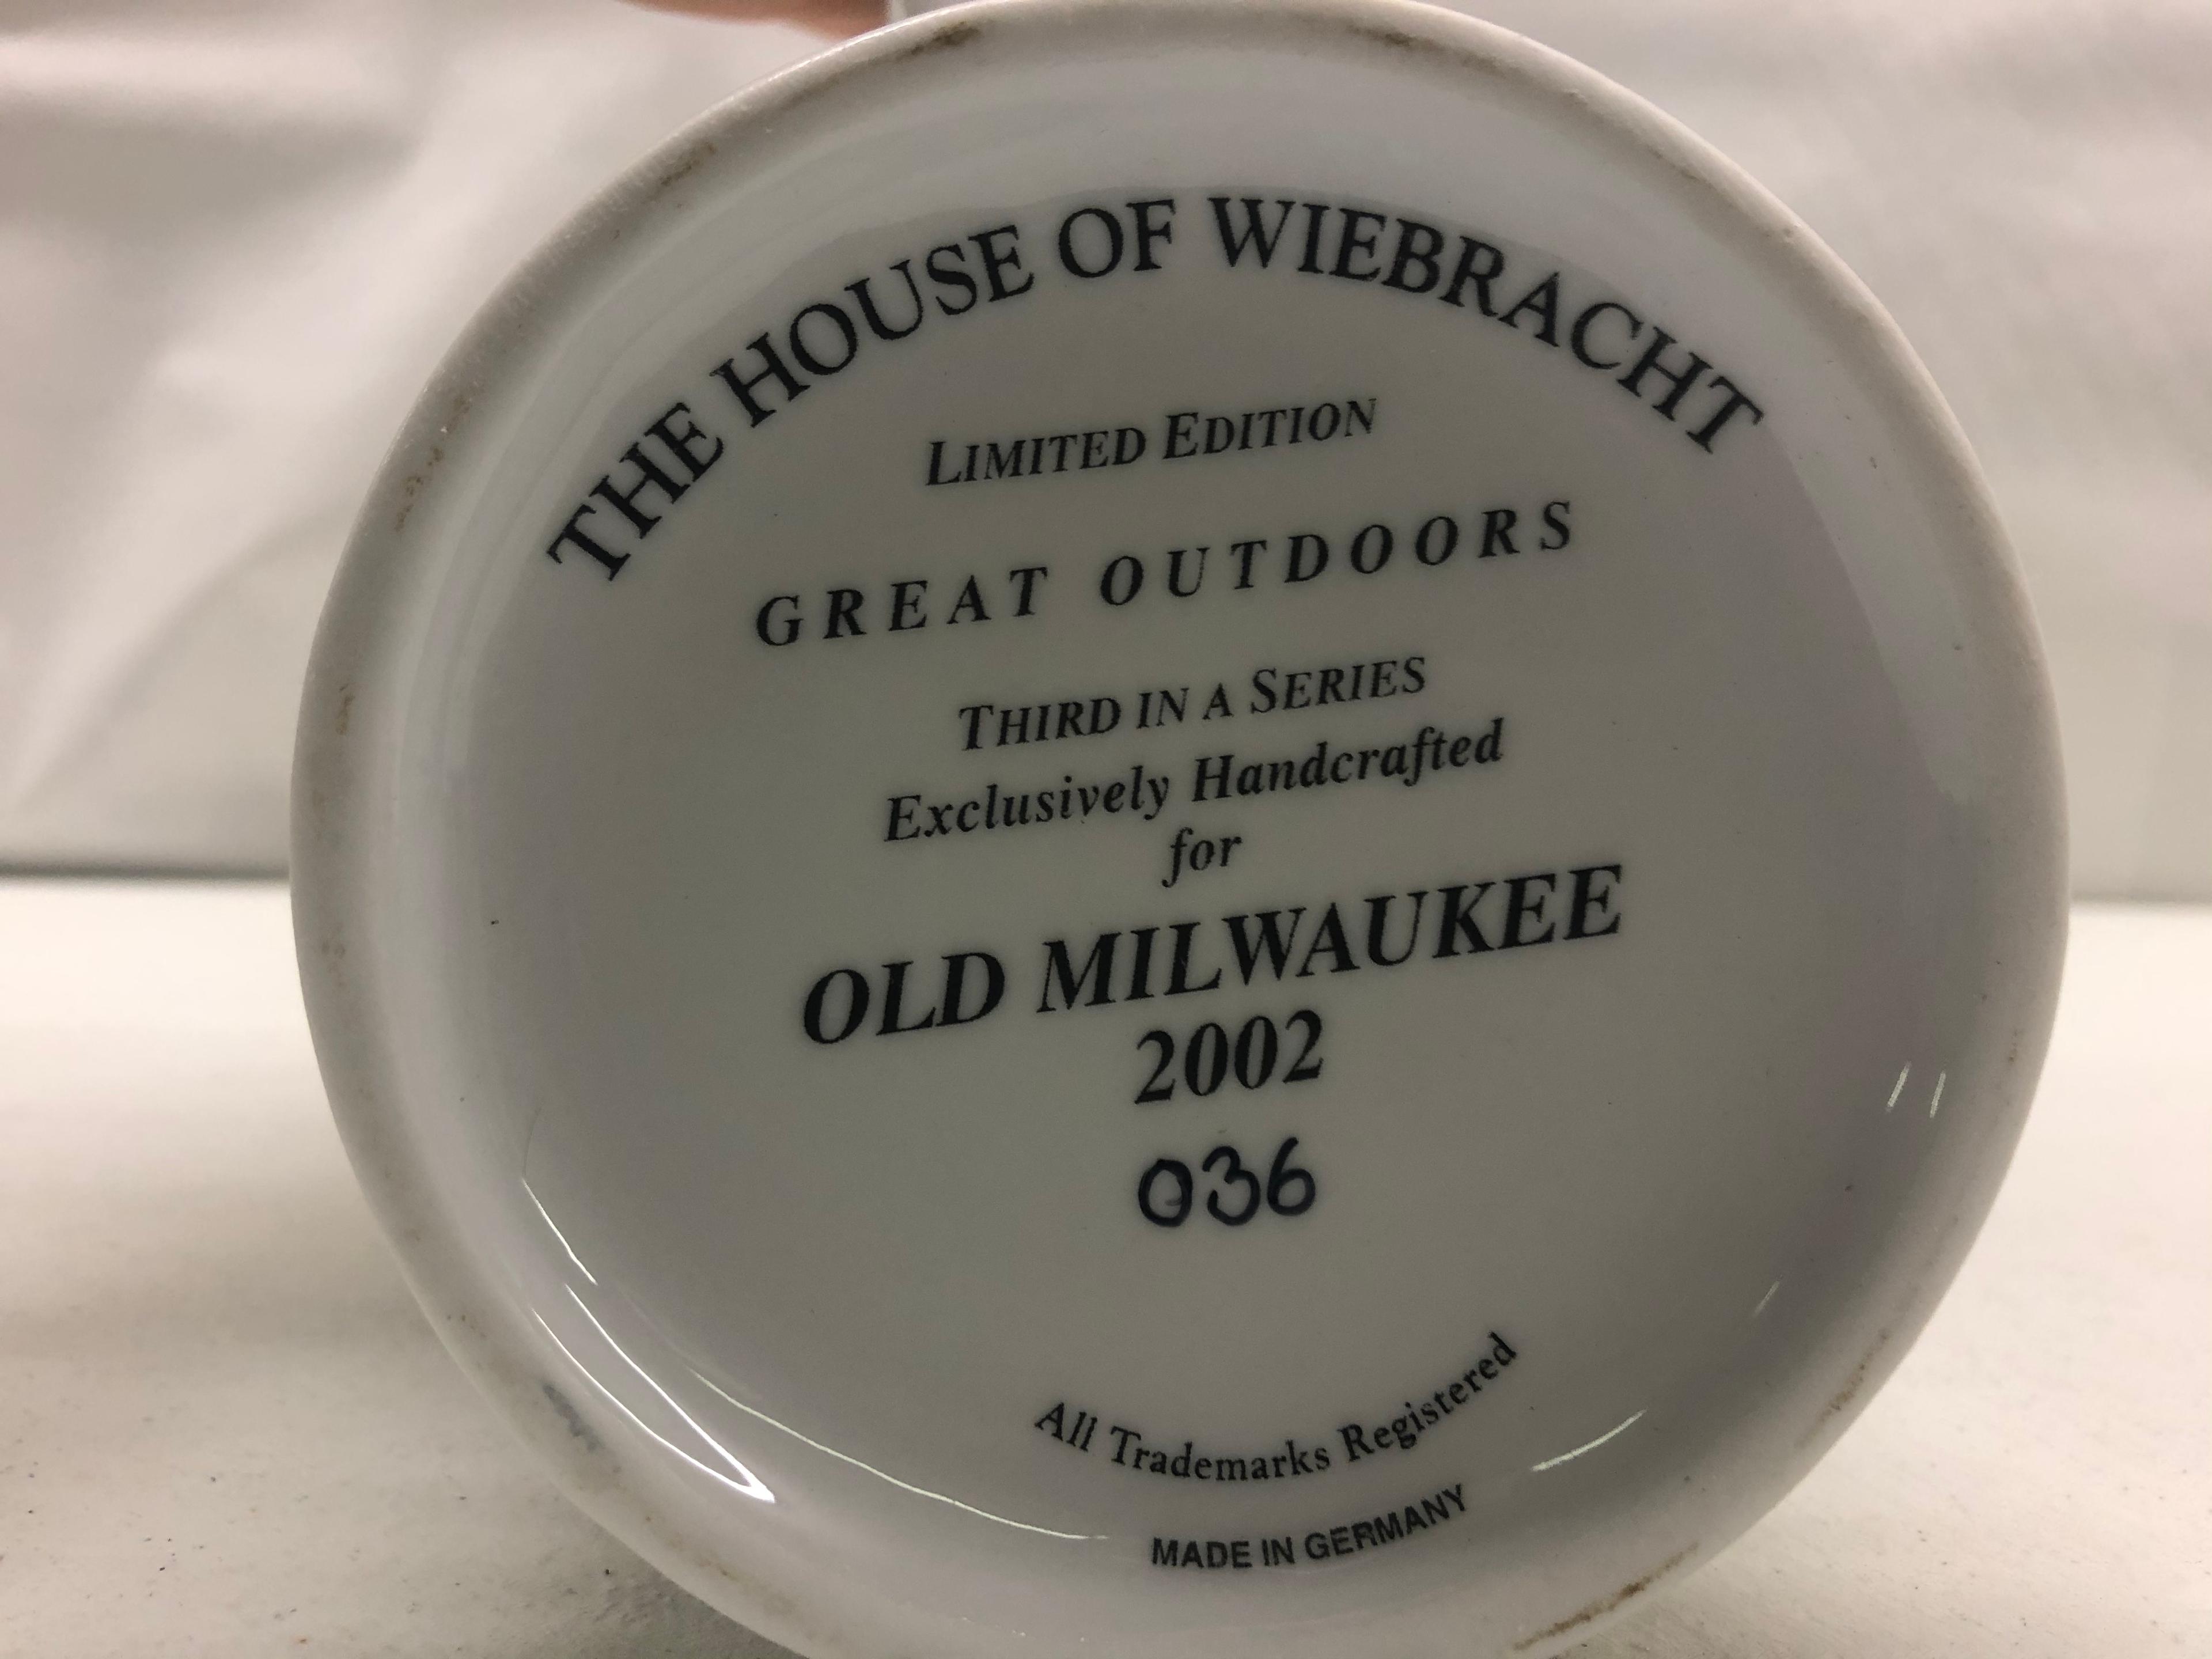 Old Milwaukee "The house of Wiebracht"